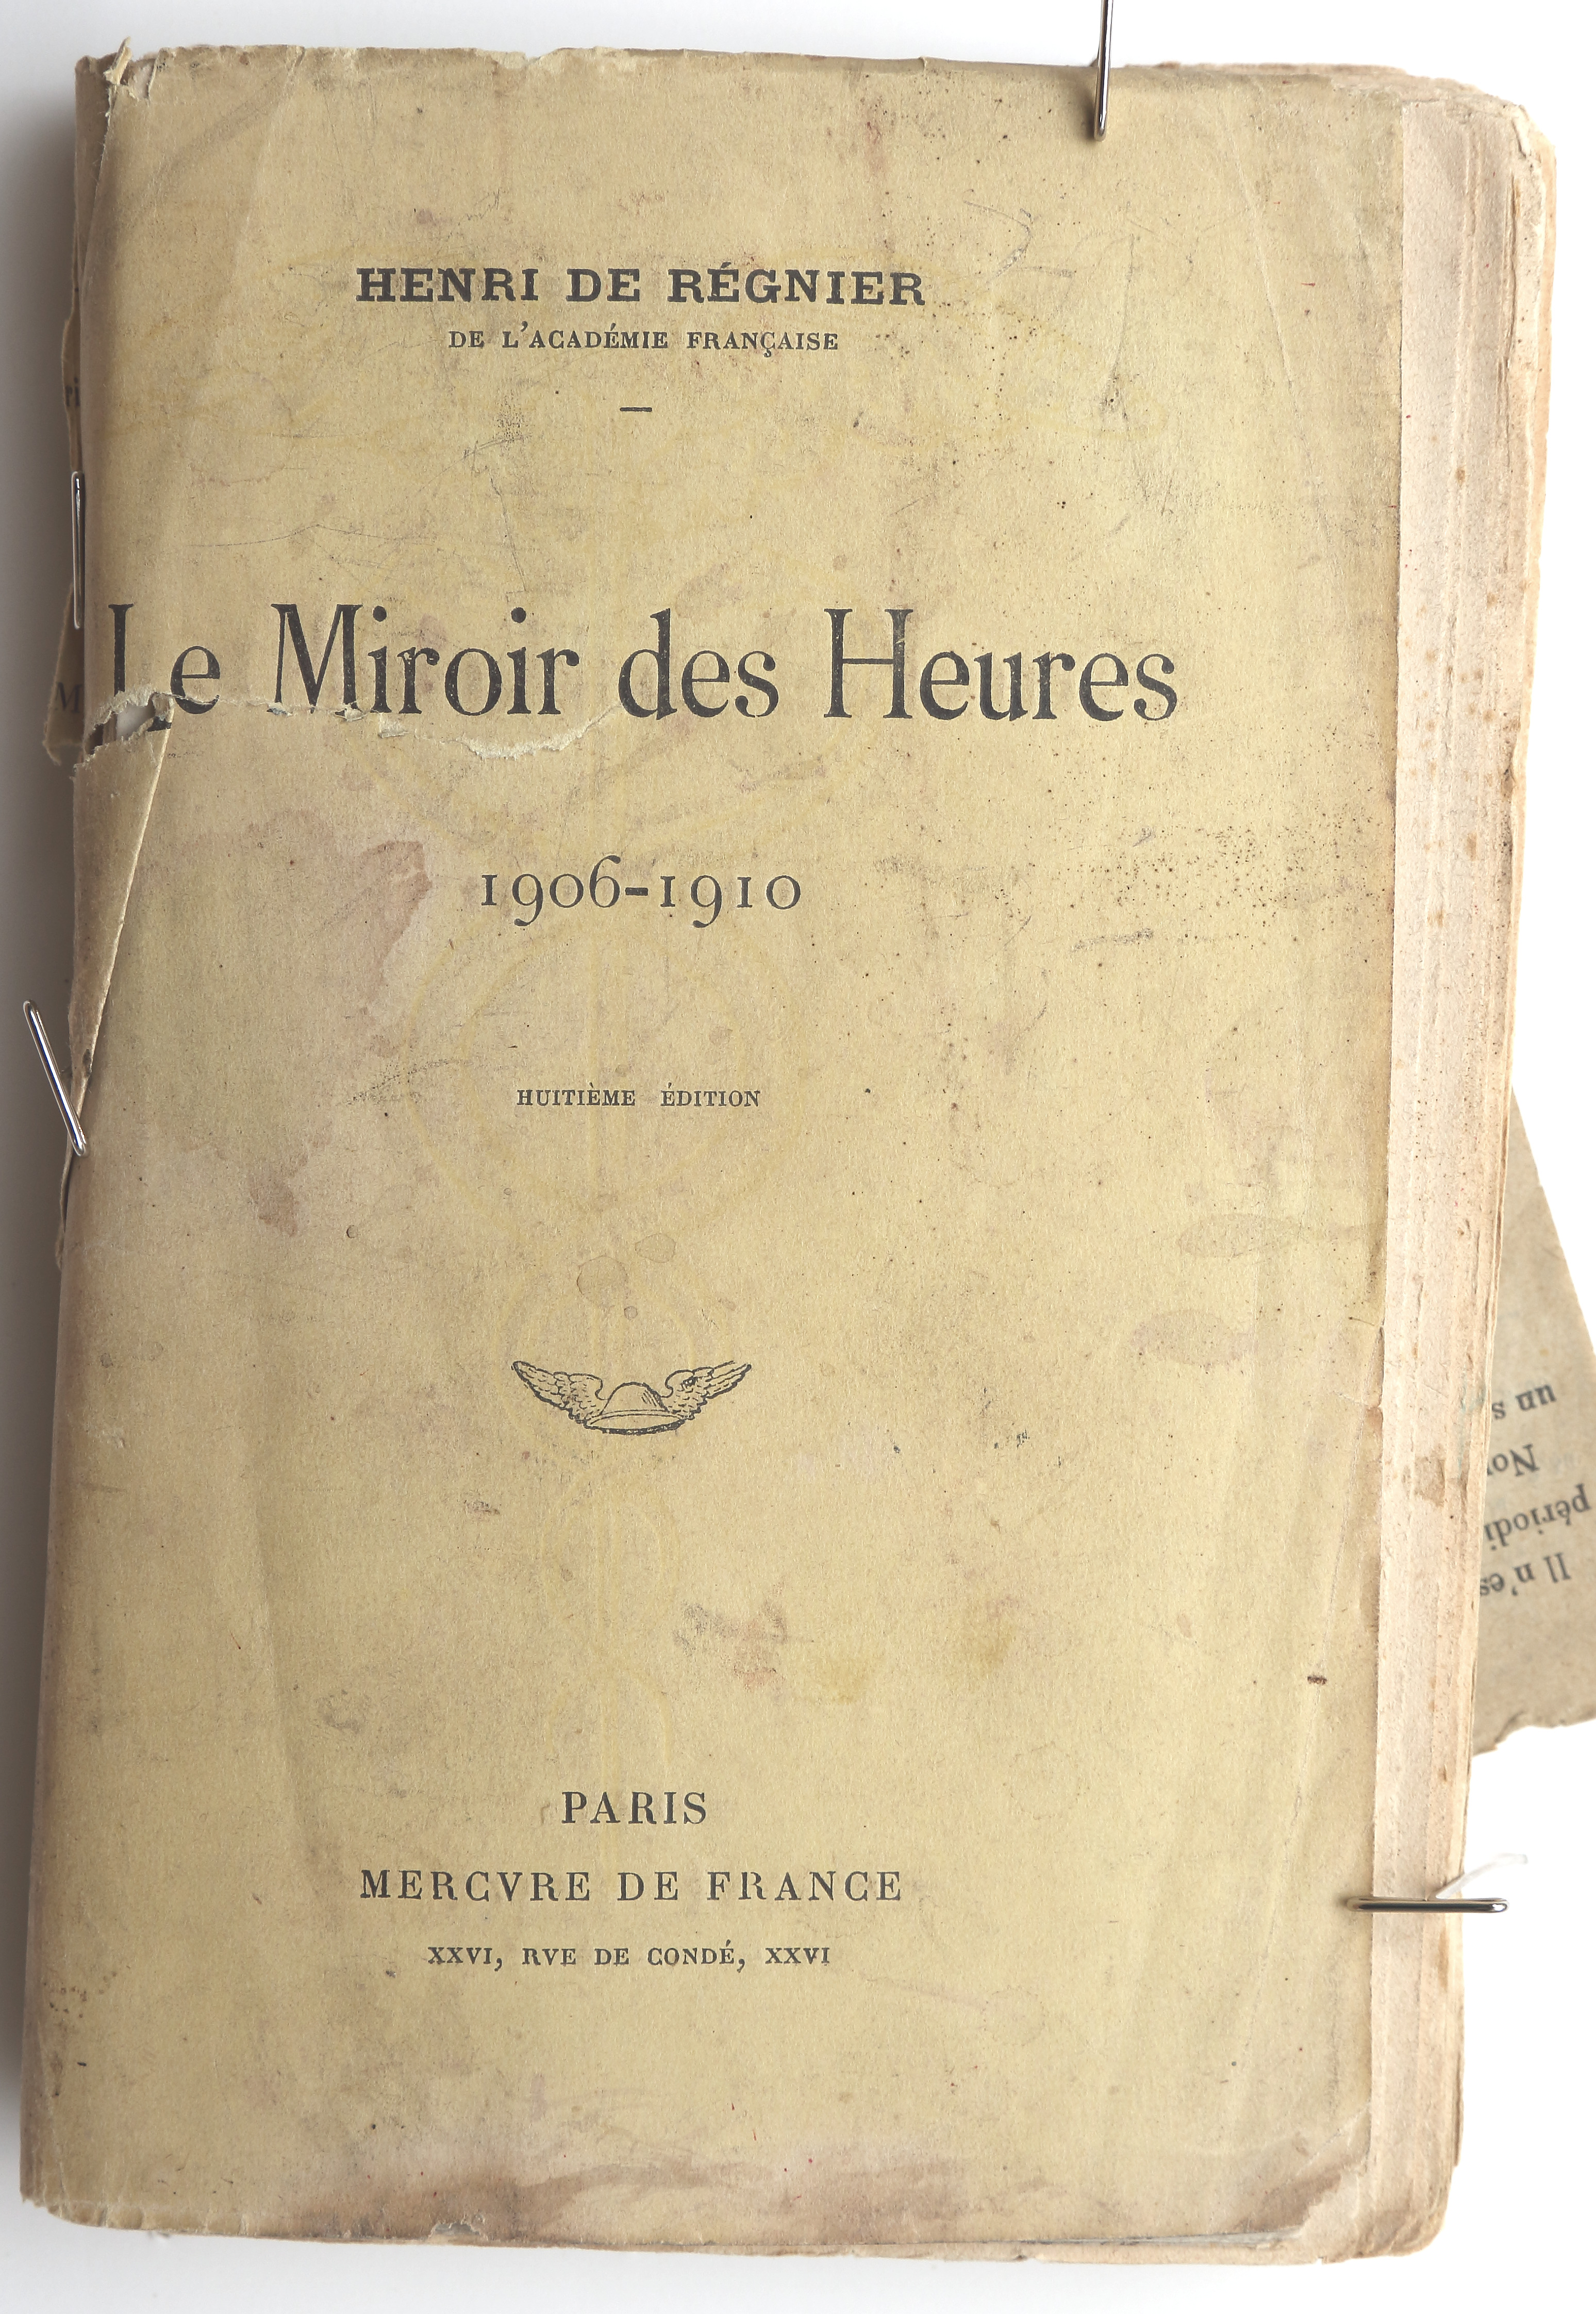 First title page.  Le Miroir des Heures, illustrations.  Jean Charlot.